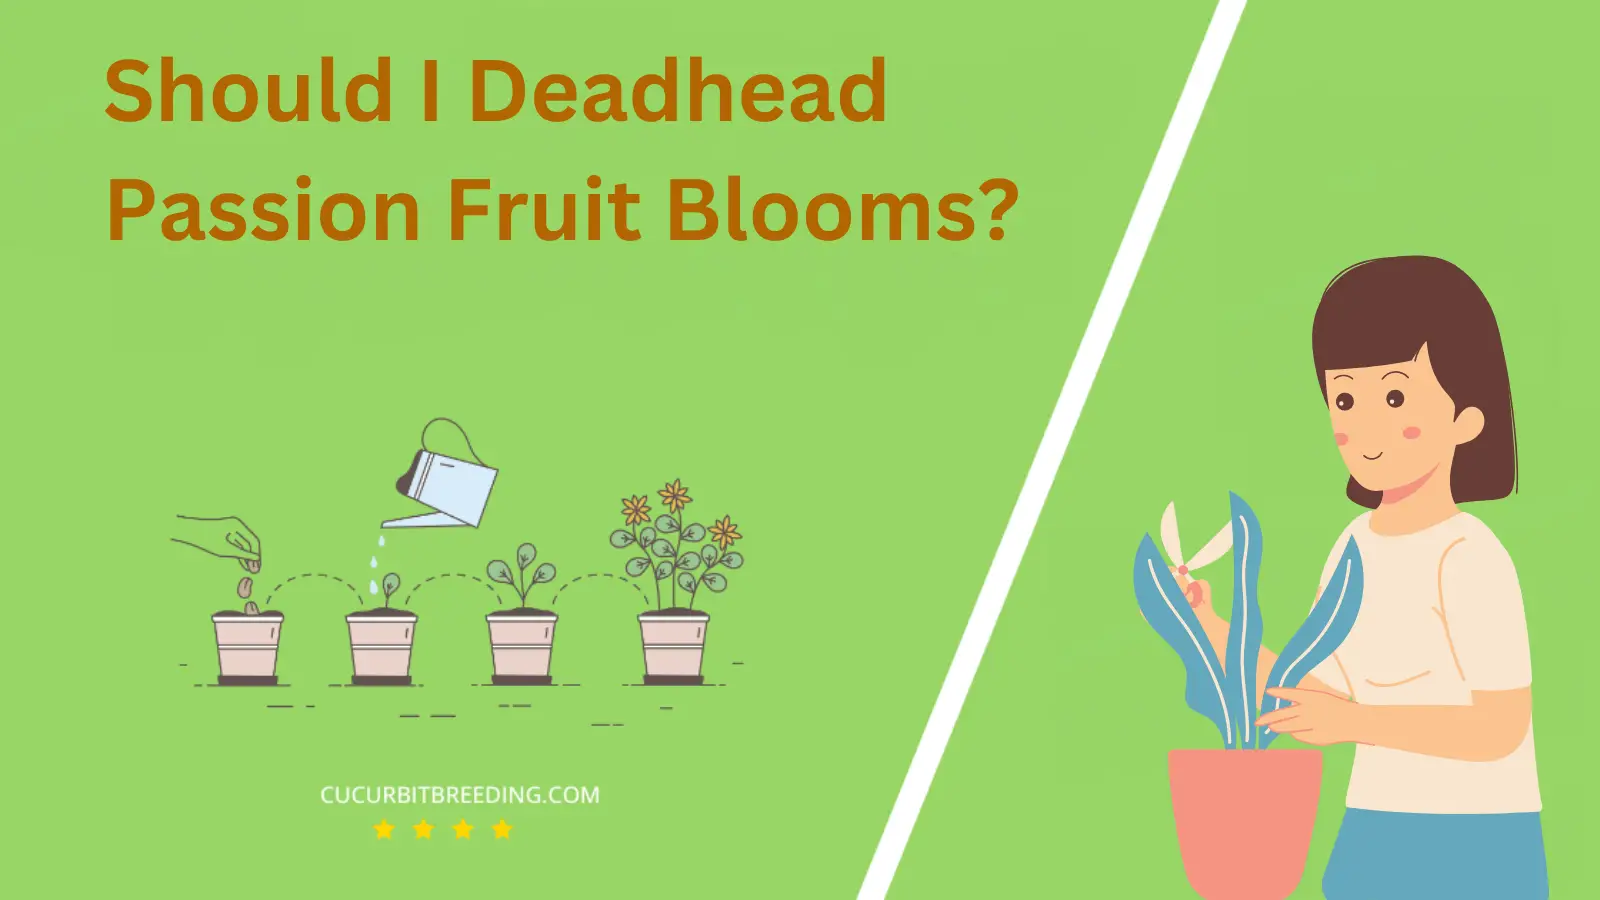 Should I Deadhead Passion Fruit Blooms?